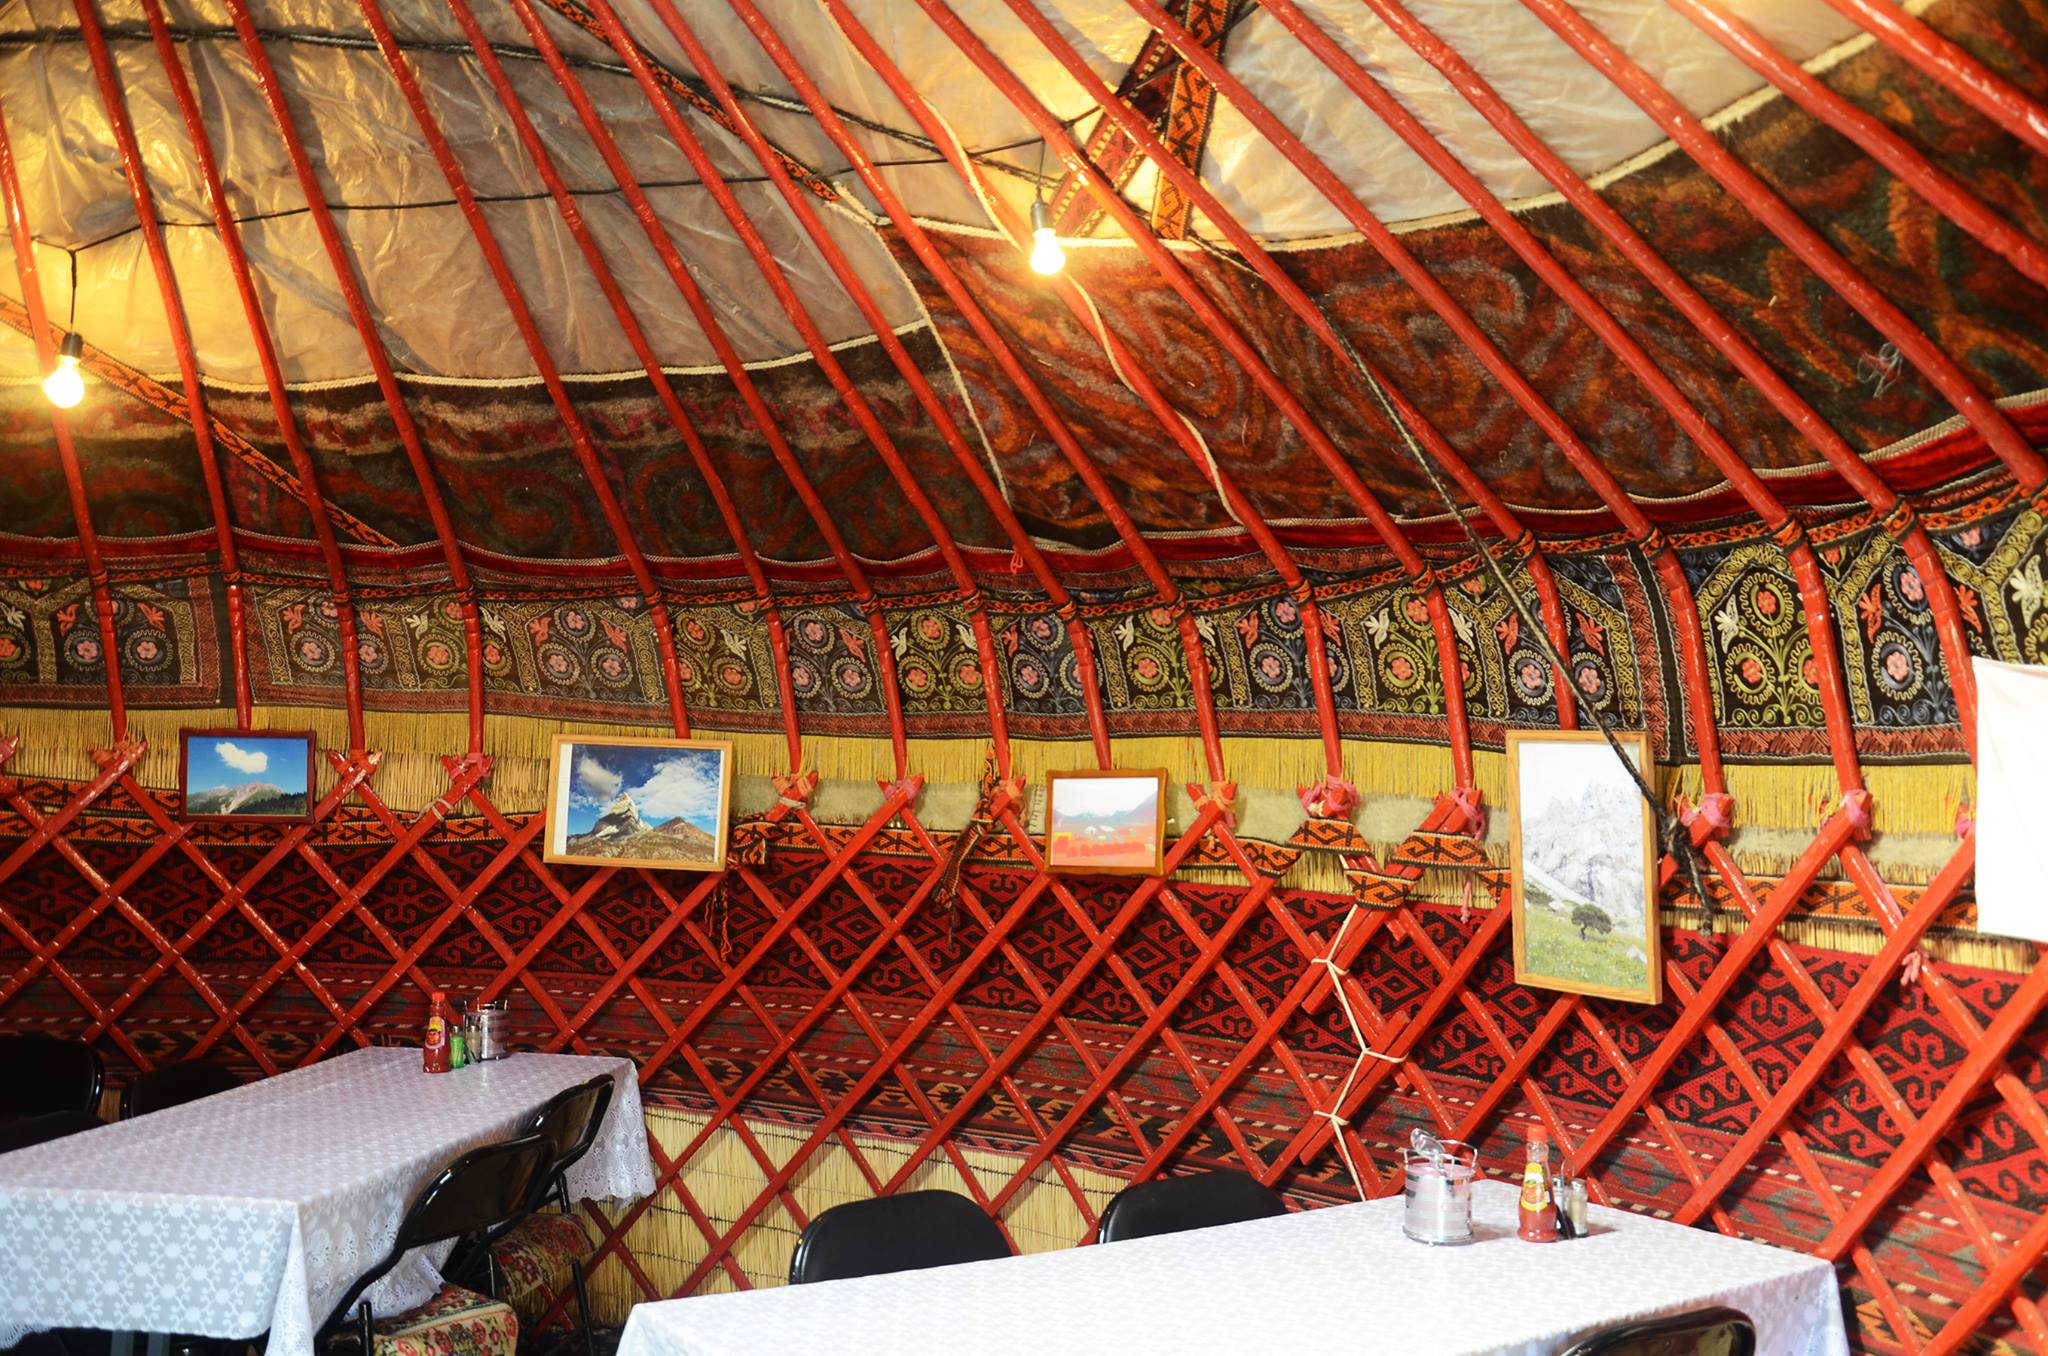 Dinning yurt at the base camp